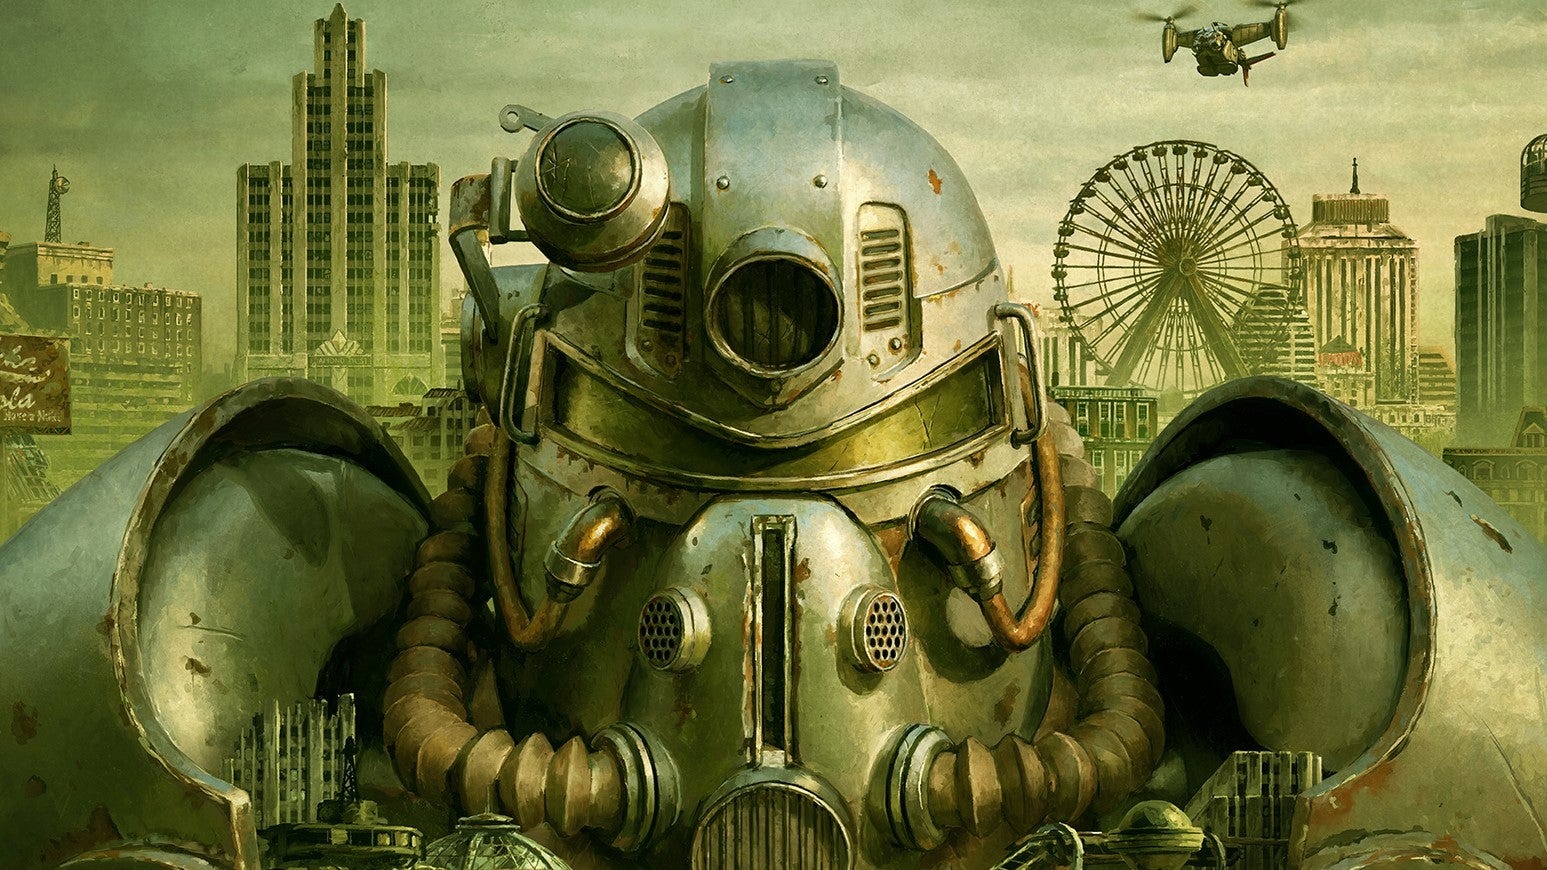 Fallout 76 Patch